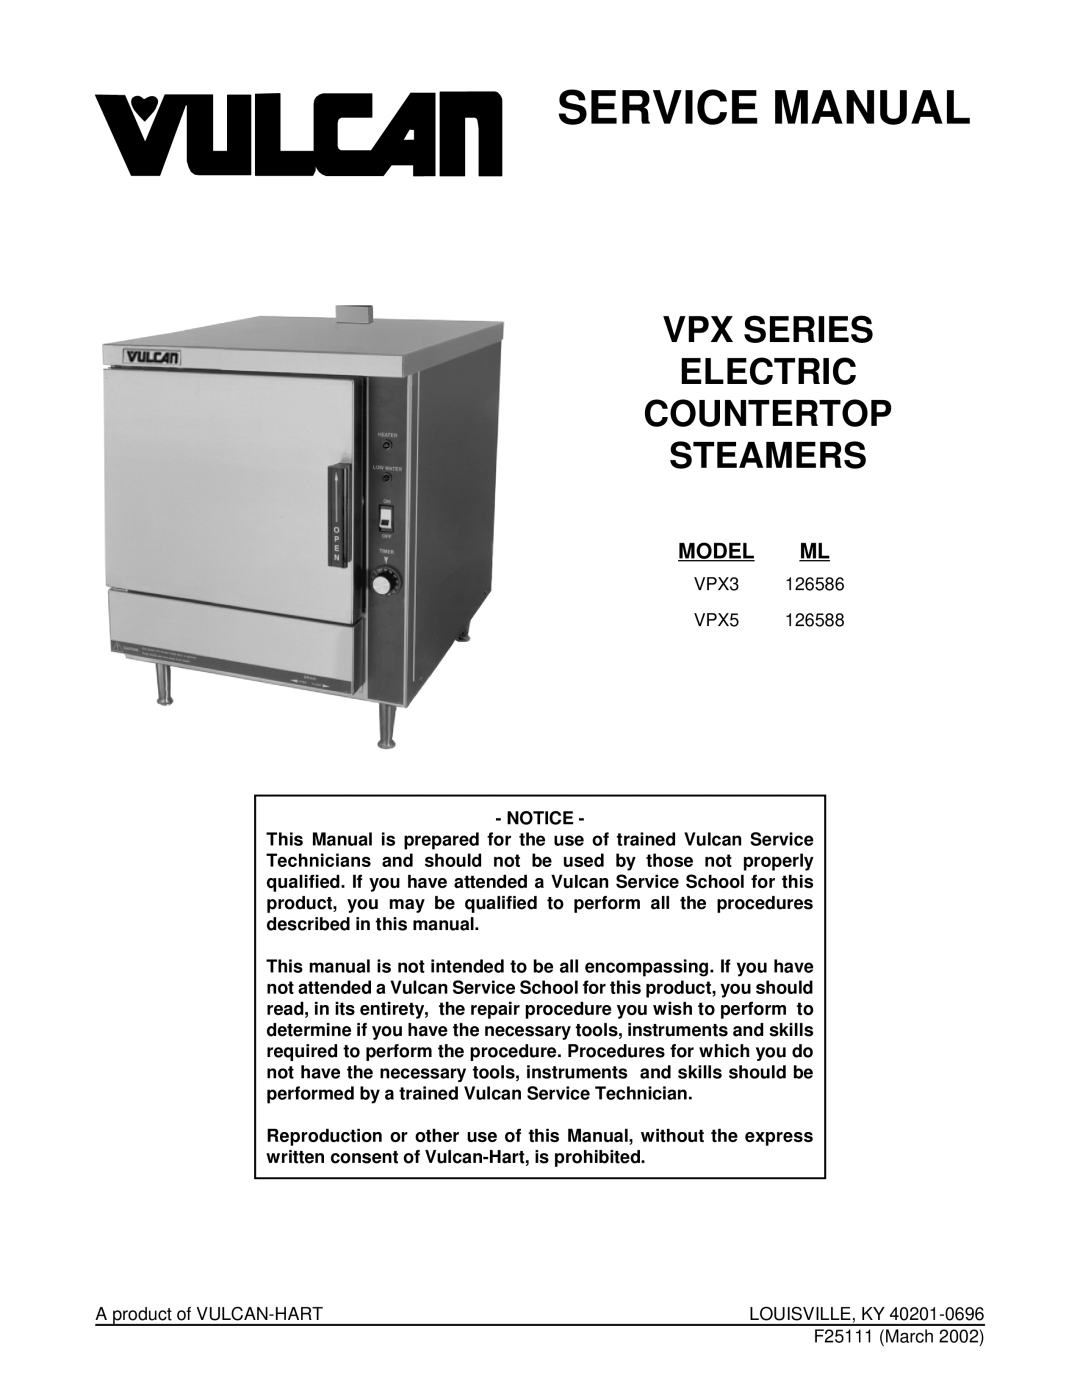 Vulcan-Hart VPX5 126588, VPX3 126586 manual Vpx Series Electric Countertop Steamers, Model Ml 